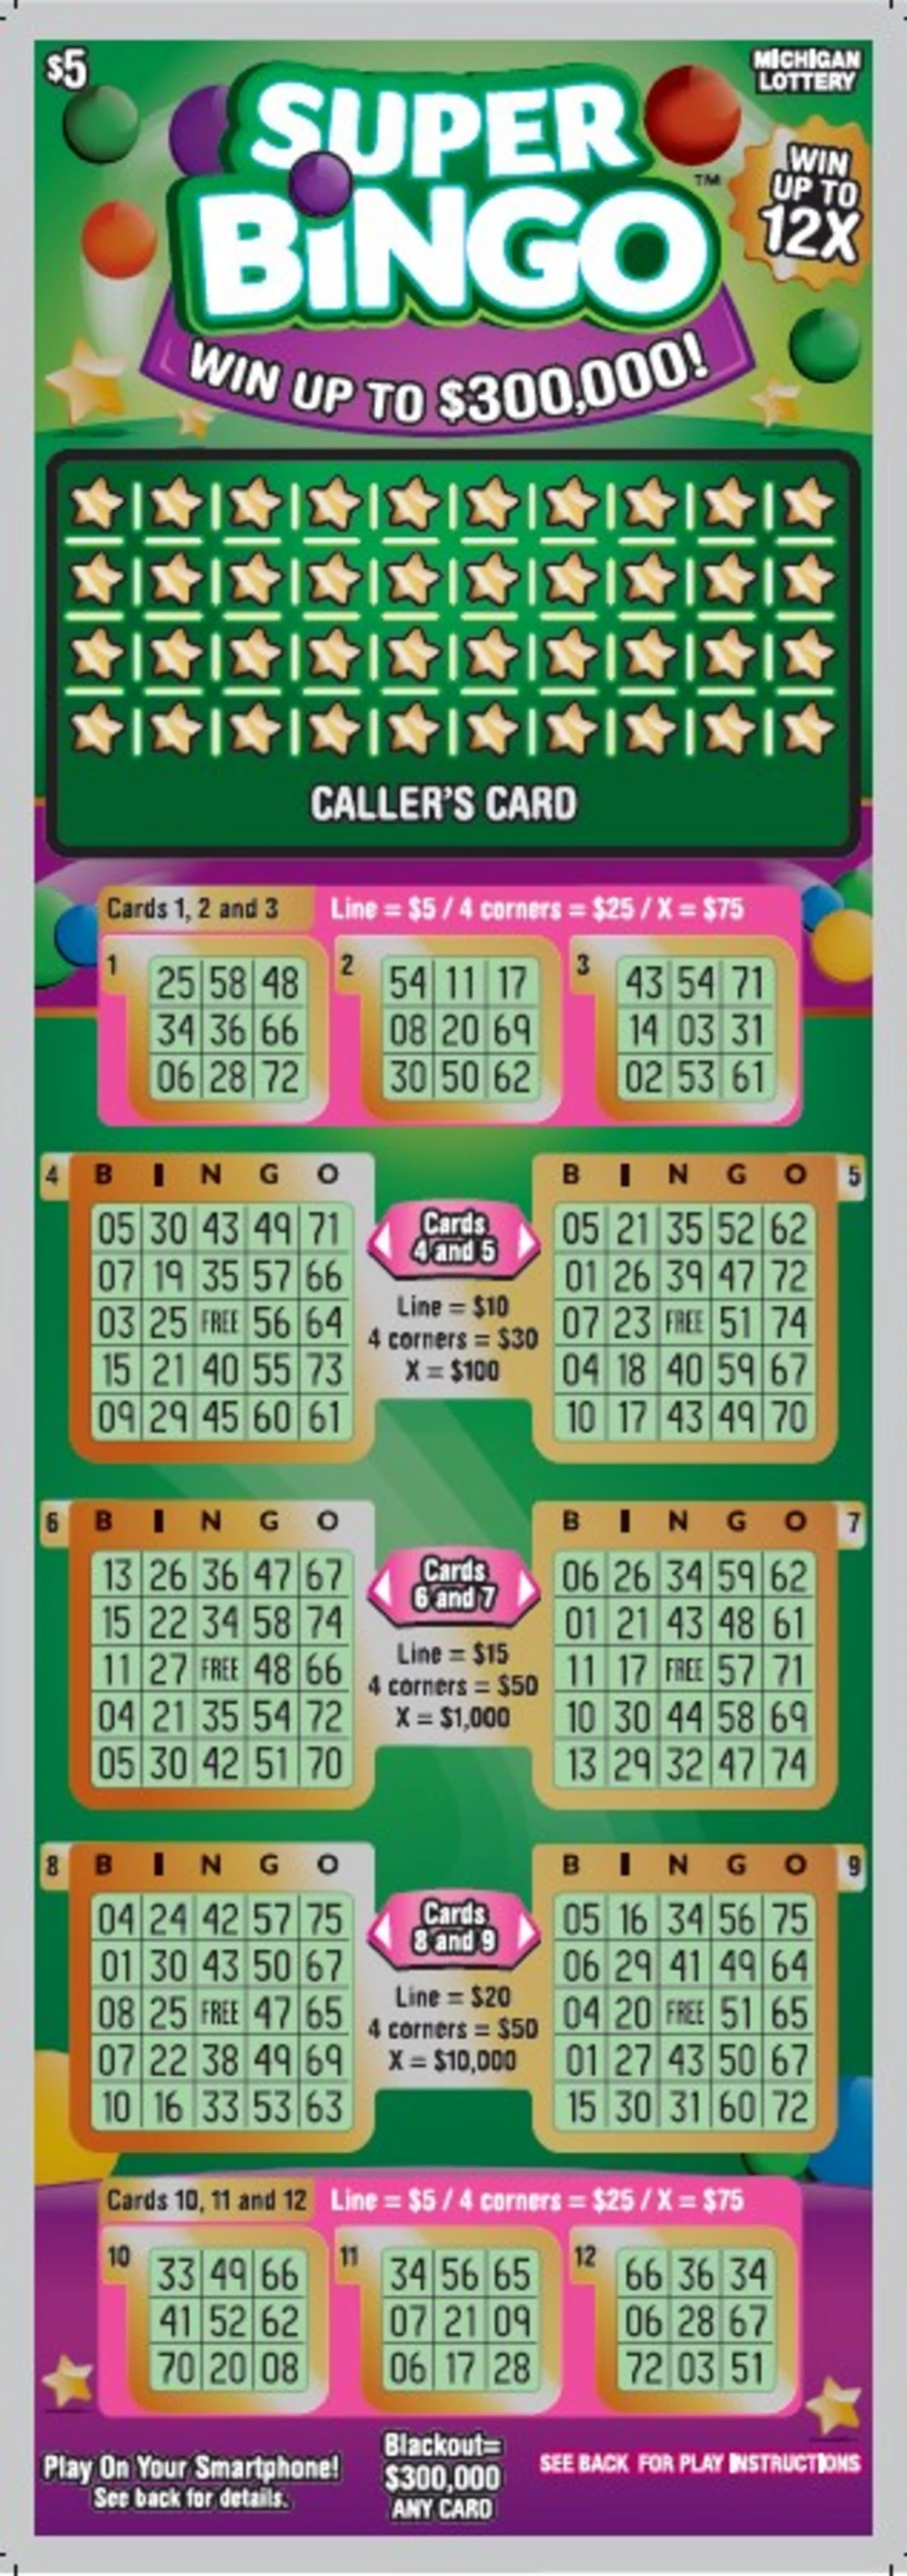 Michigan lottery second chance bingo